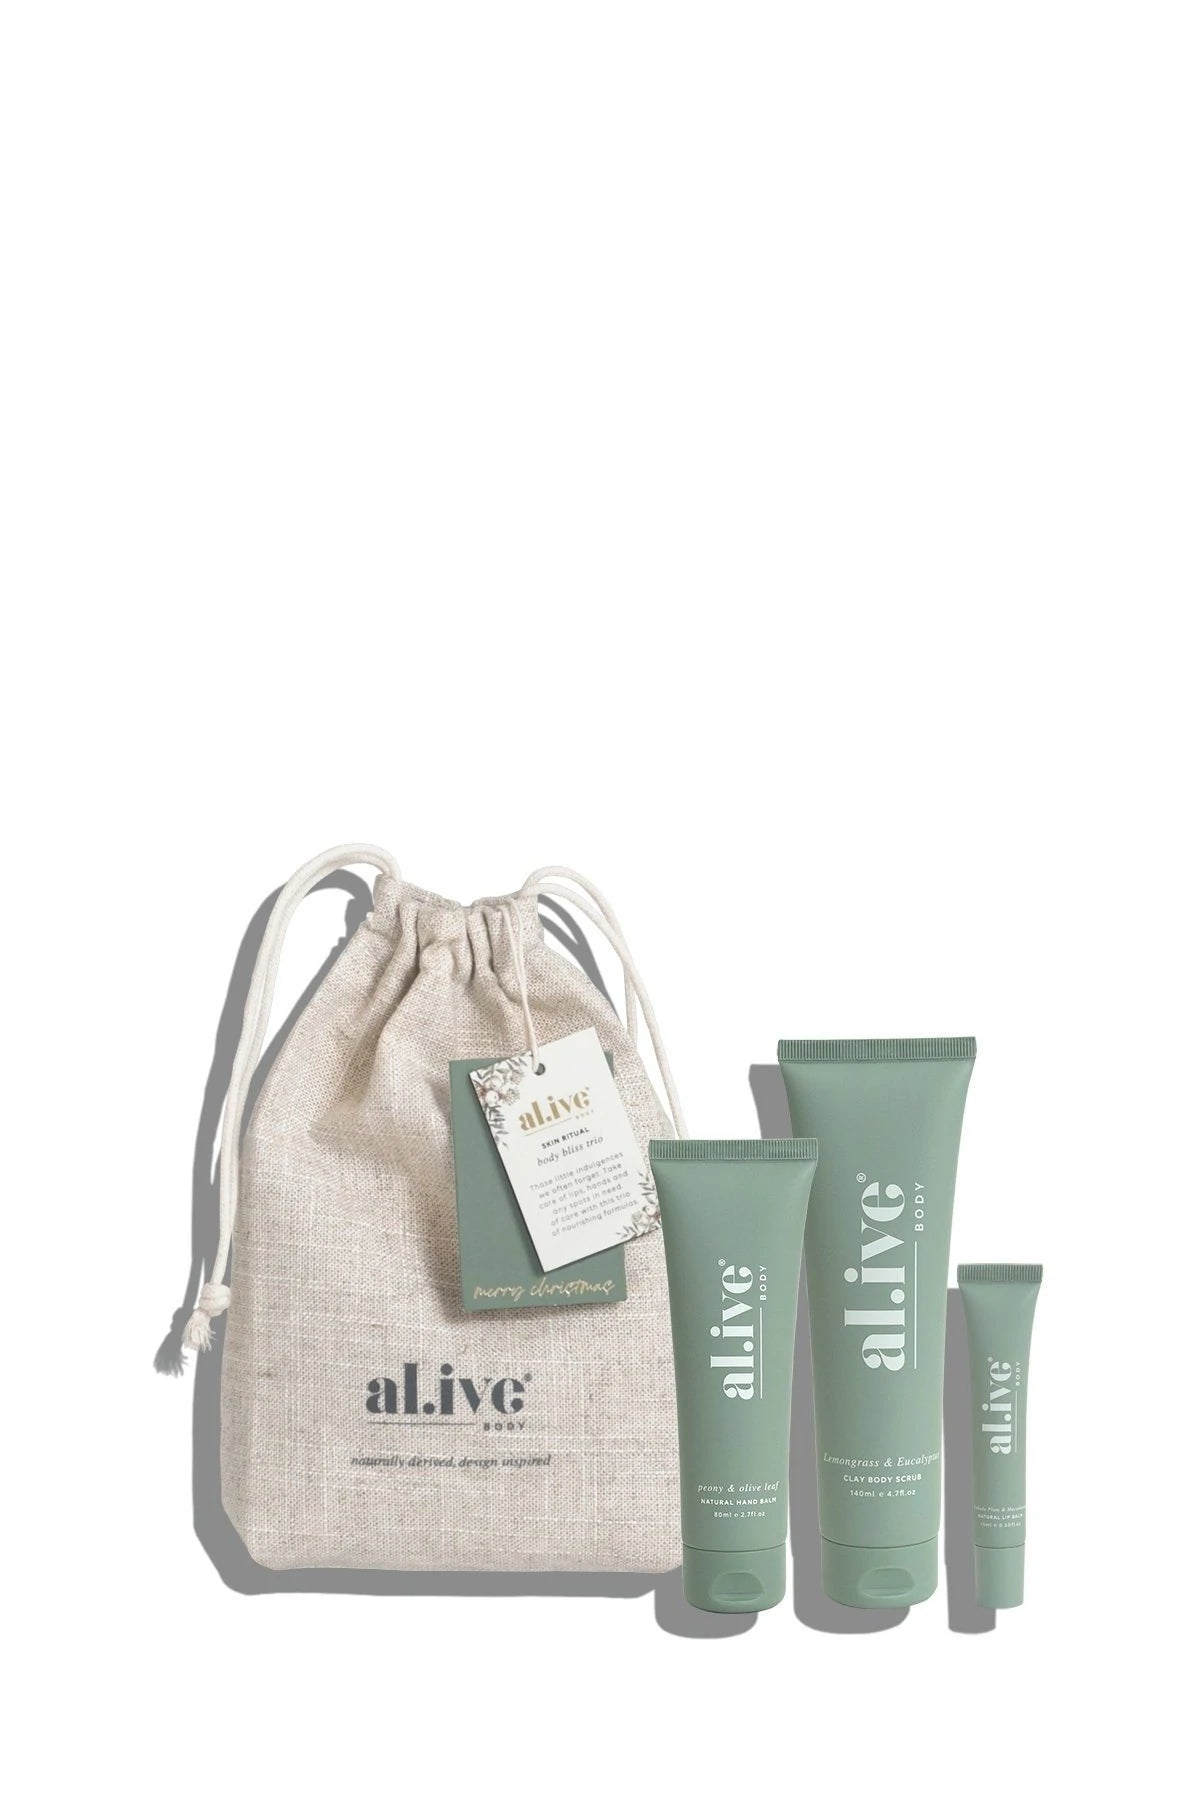 al.ive Body - Body Bliss Pack | alive body | the ivy plant studio 